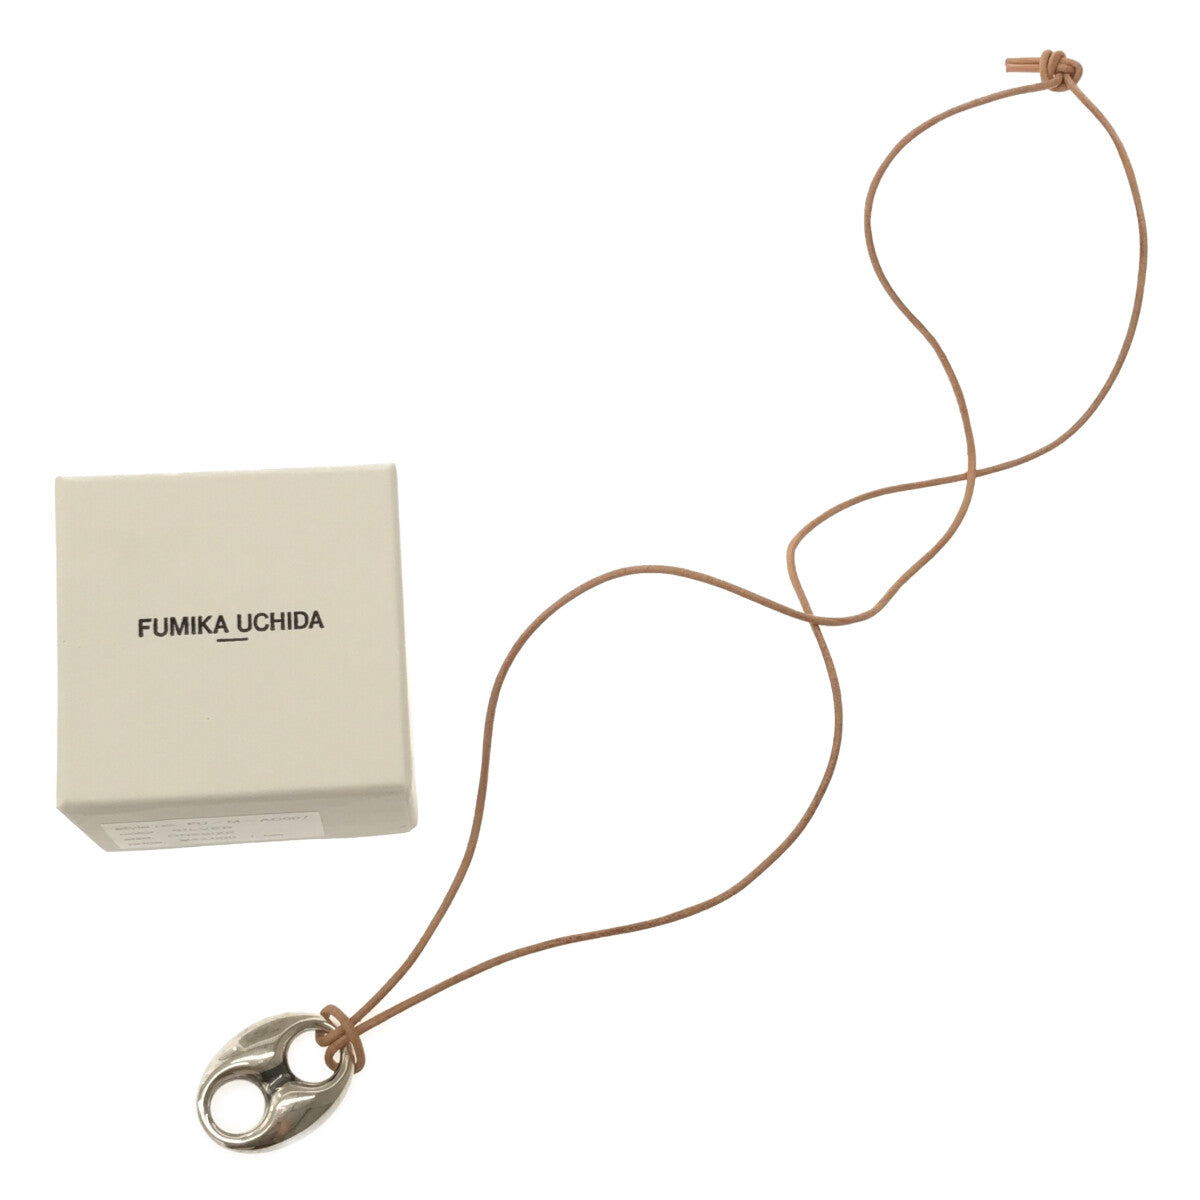 FUMIKA UCHIDA / フミカウチダ | SILVER SCARF RING / シルバースカーフリング ネックレス |